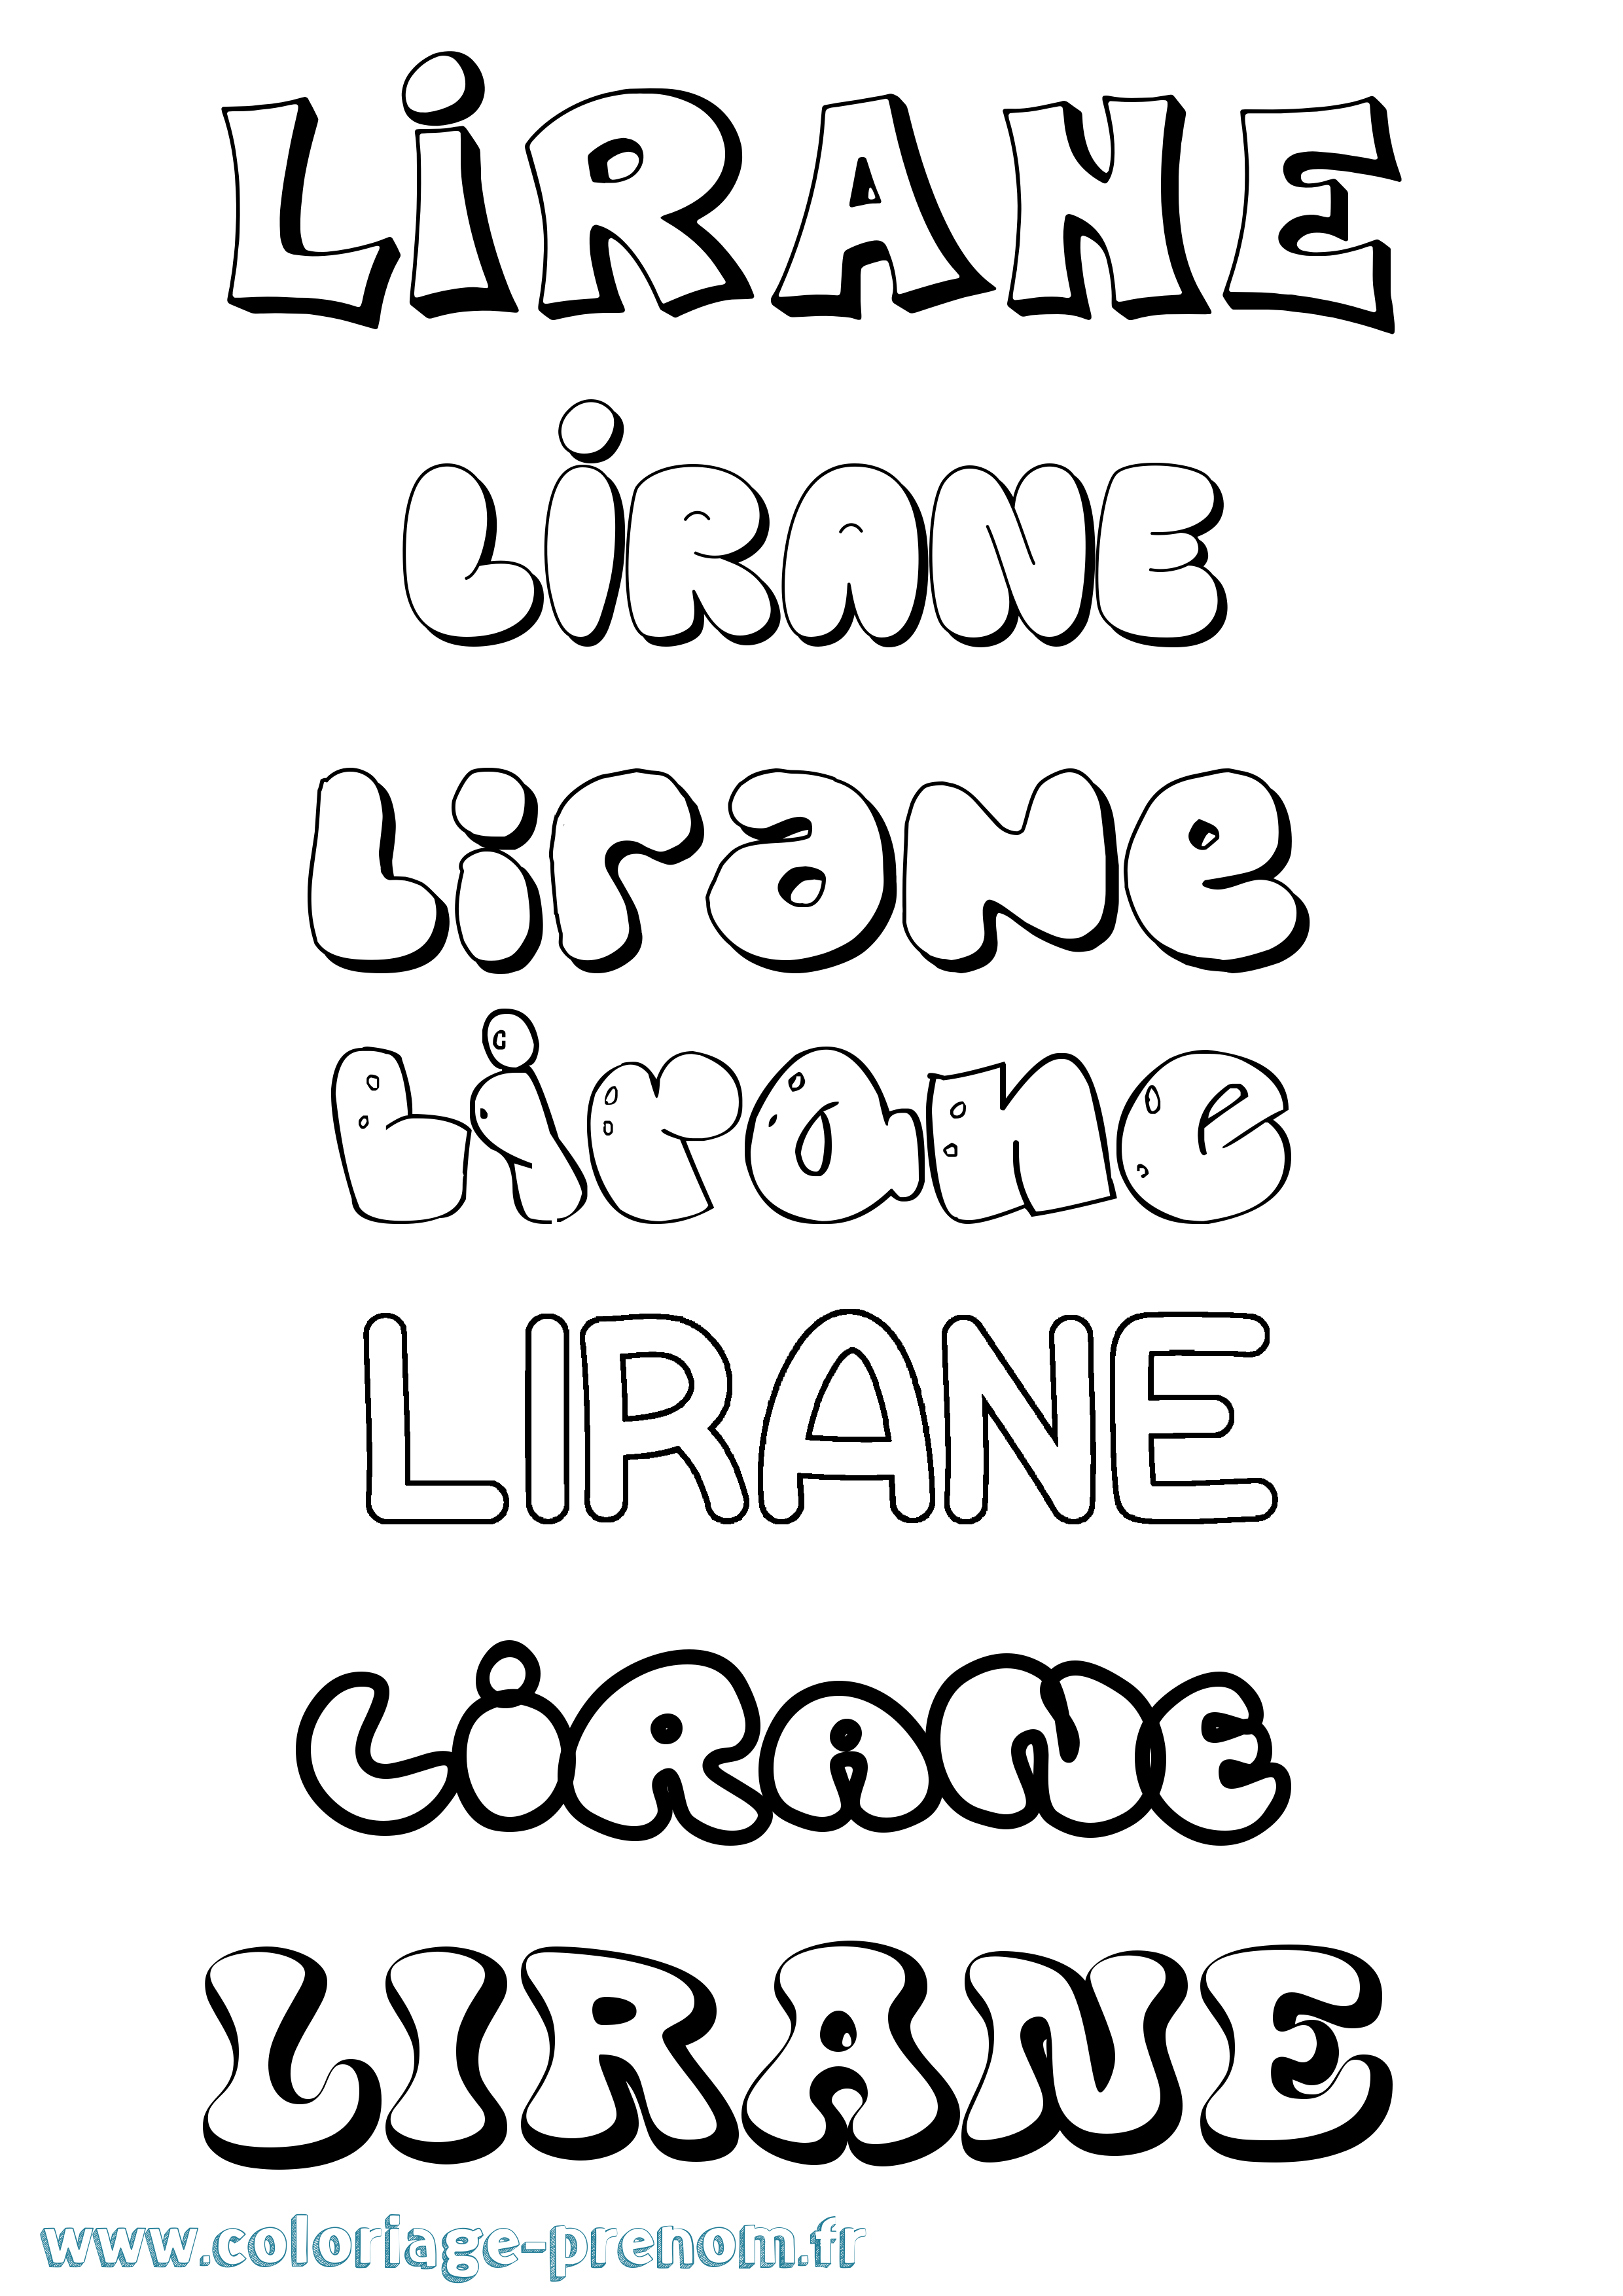 Coloriage prénom Lirane Bubble